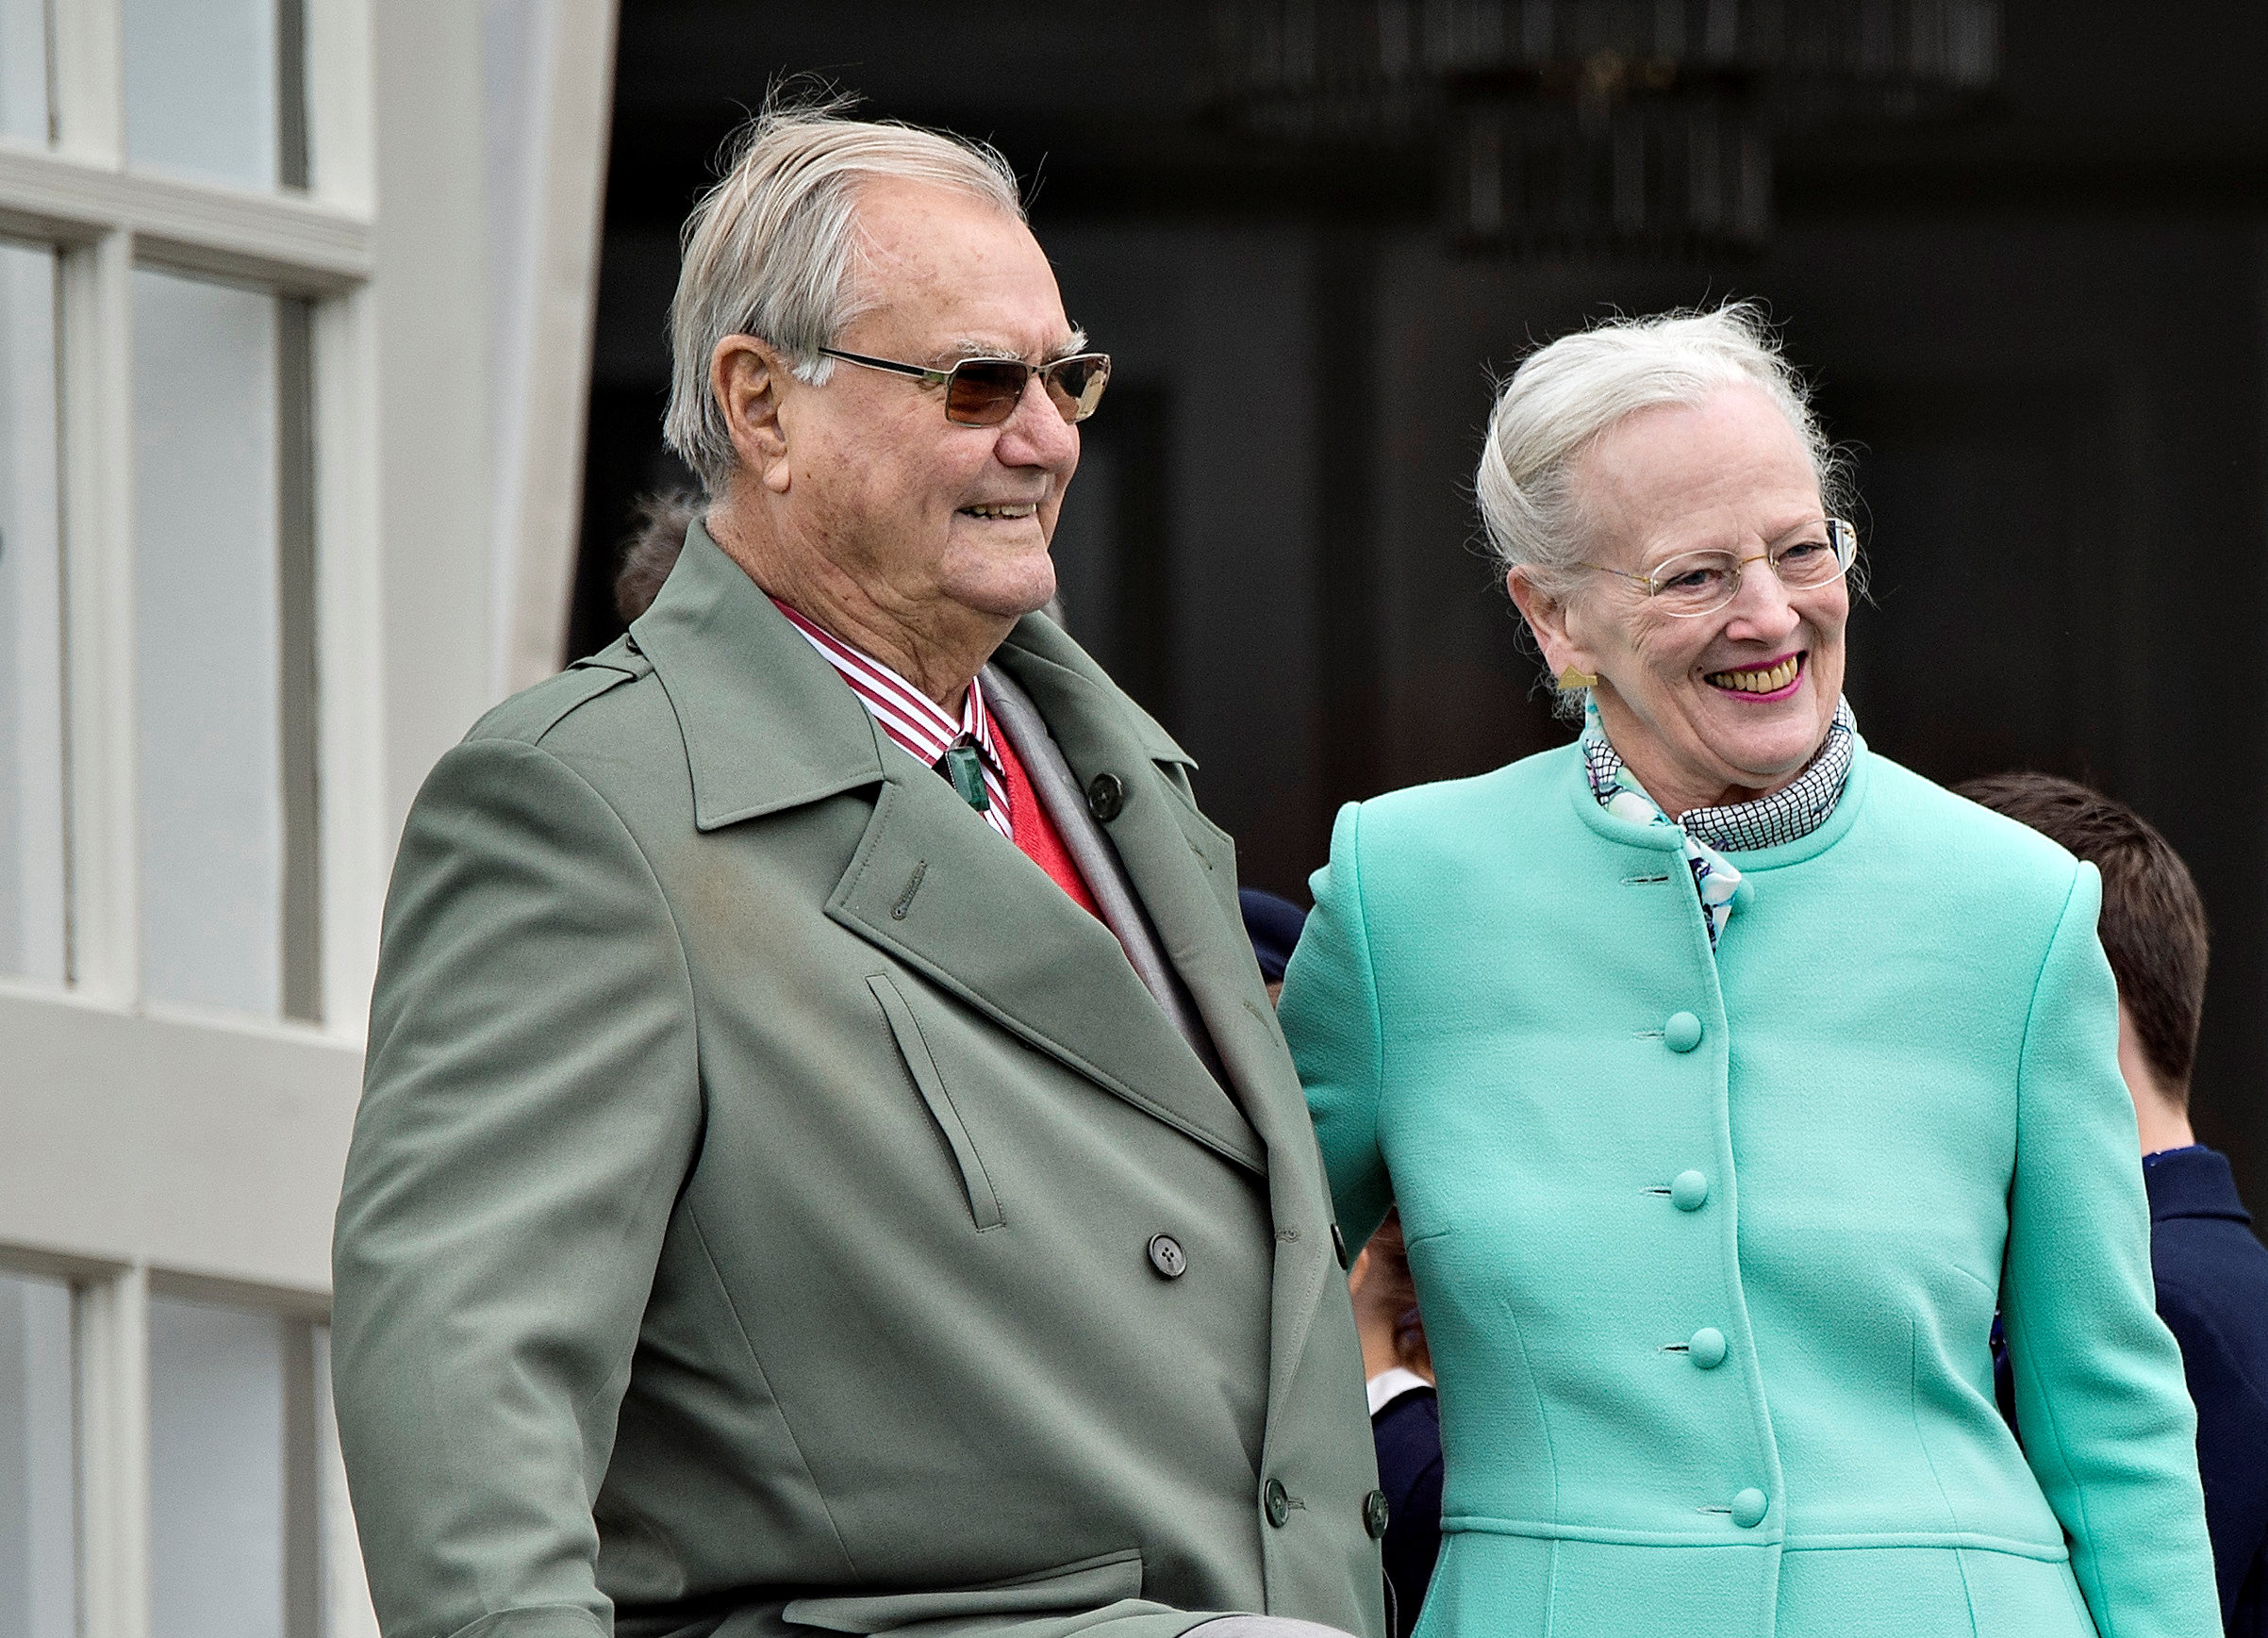 Danish Queen's husband Prince Henrik diagnosed with dementia